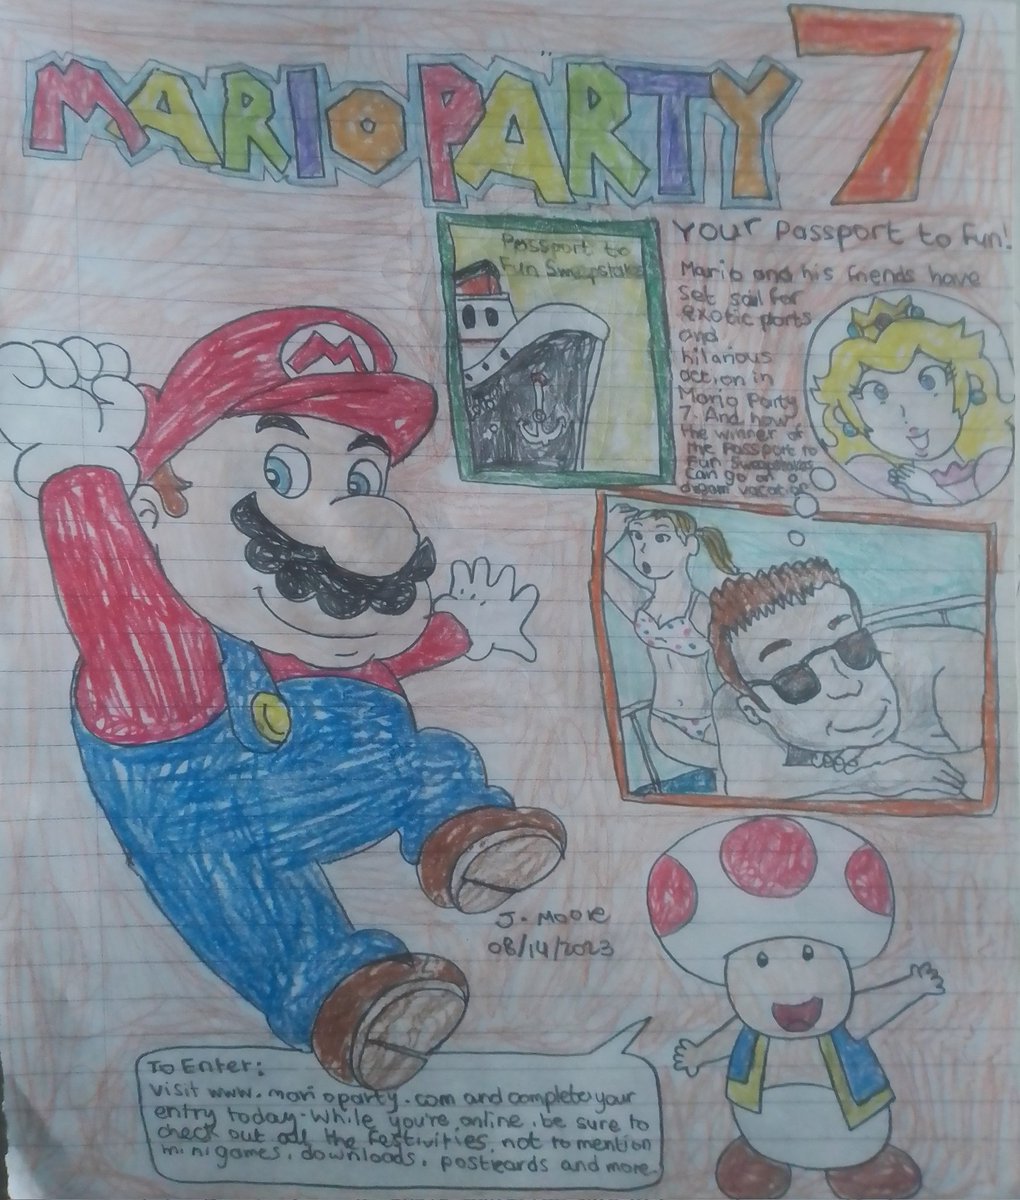 It's been 18 years since Mario Party 7 was released on the Nintendo GameCube
#myart #myartwork
#handdrawn #Mario #MarioParty #marioparty7 #18yearsofmarioparty7 #PrincessPeach #handdrawn #TodayInHistory #onthisday #nintendogamecube #toadnintendo #todayingaminghistory